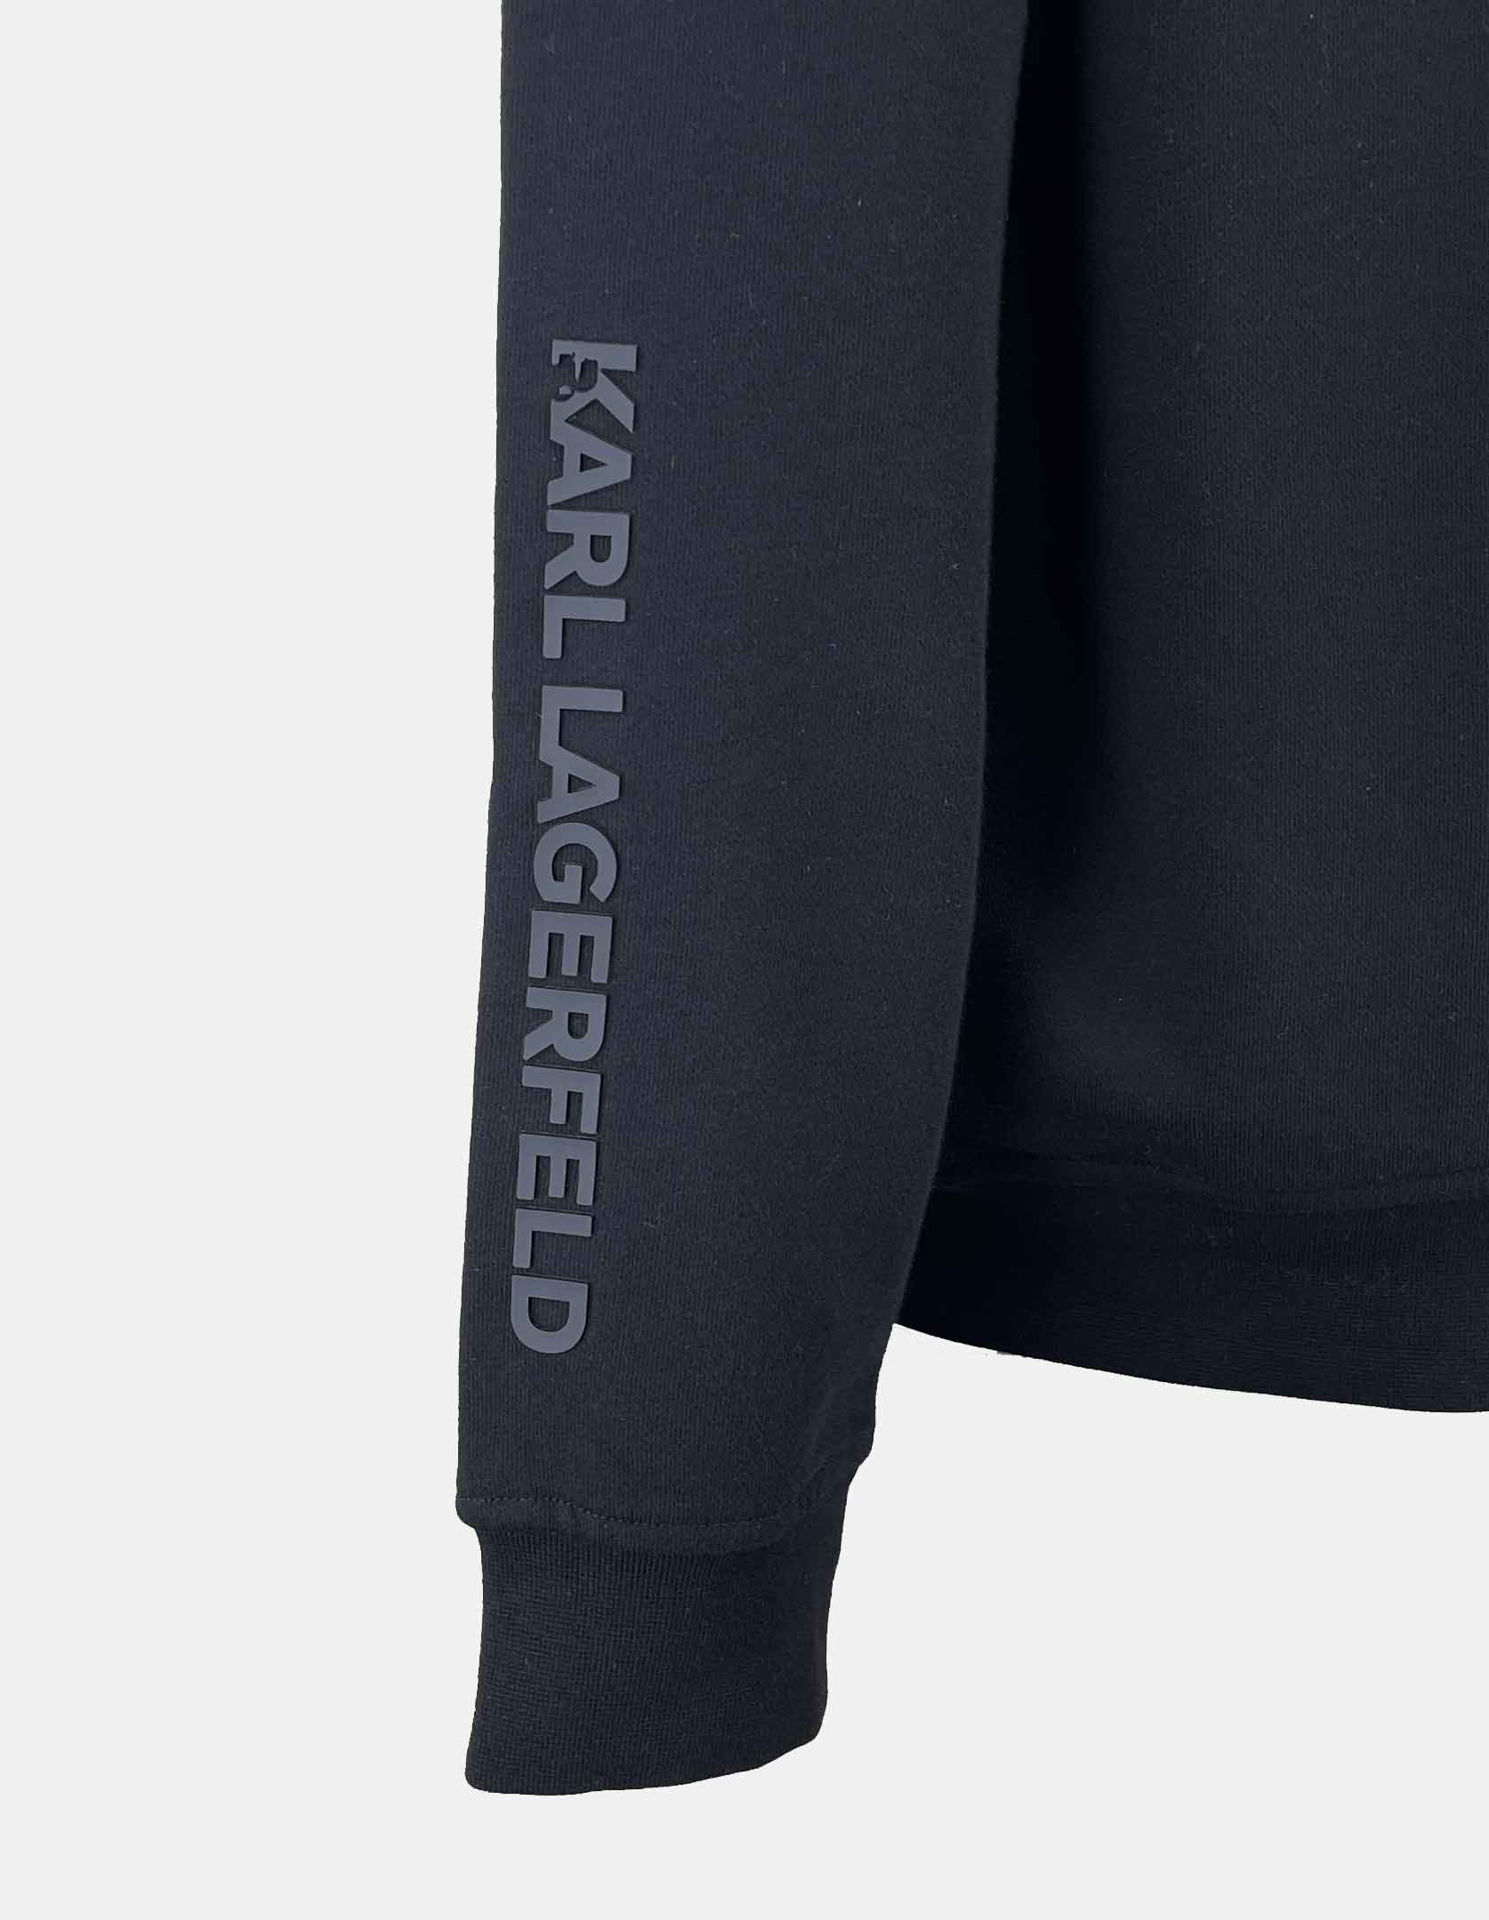 Karl Lagerfeld Embossed Address Sweatshirt - George Harrison | Designer ...